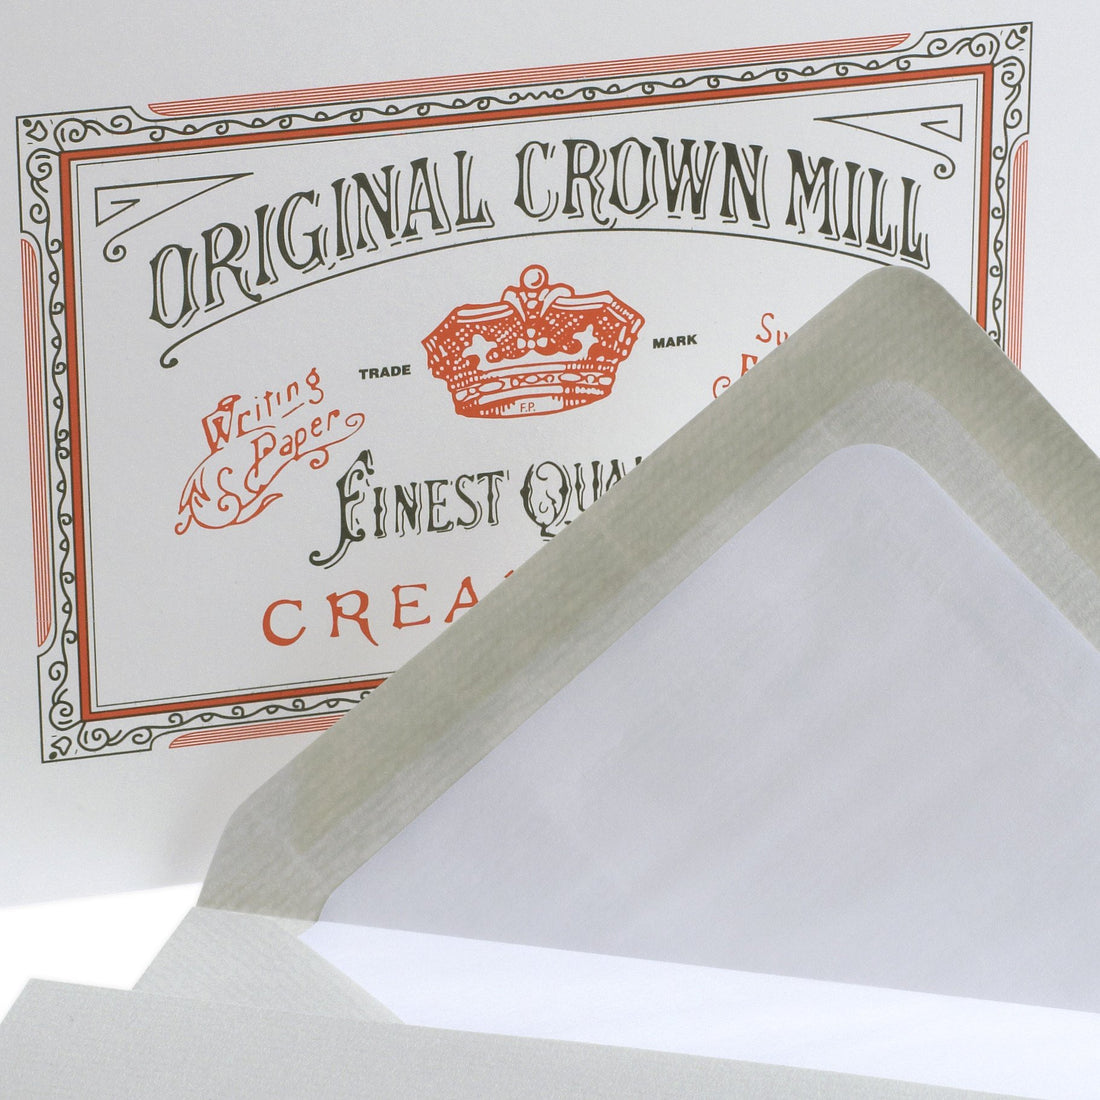 Crown Mill Classic Laid Note Card Presentation Box Grey 